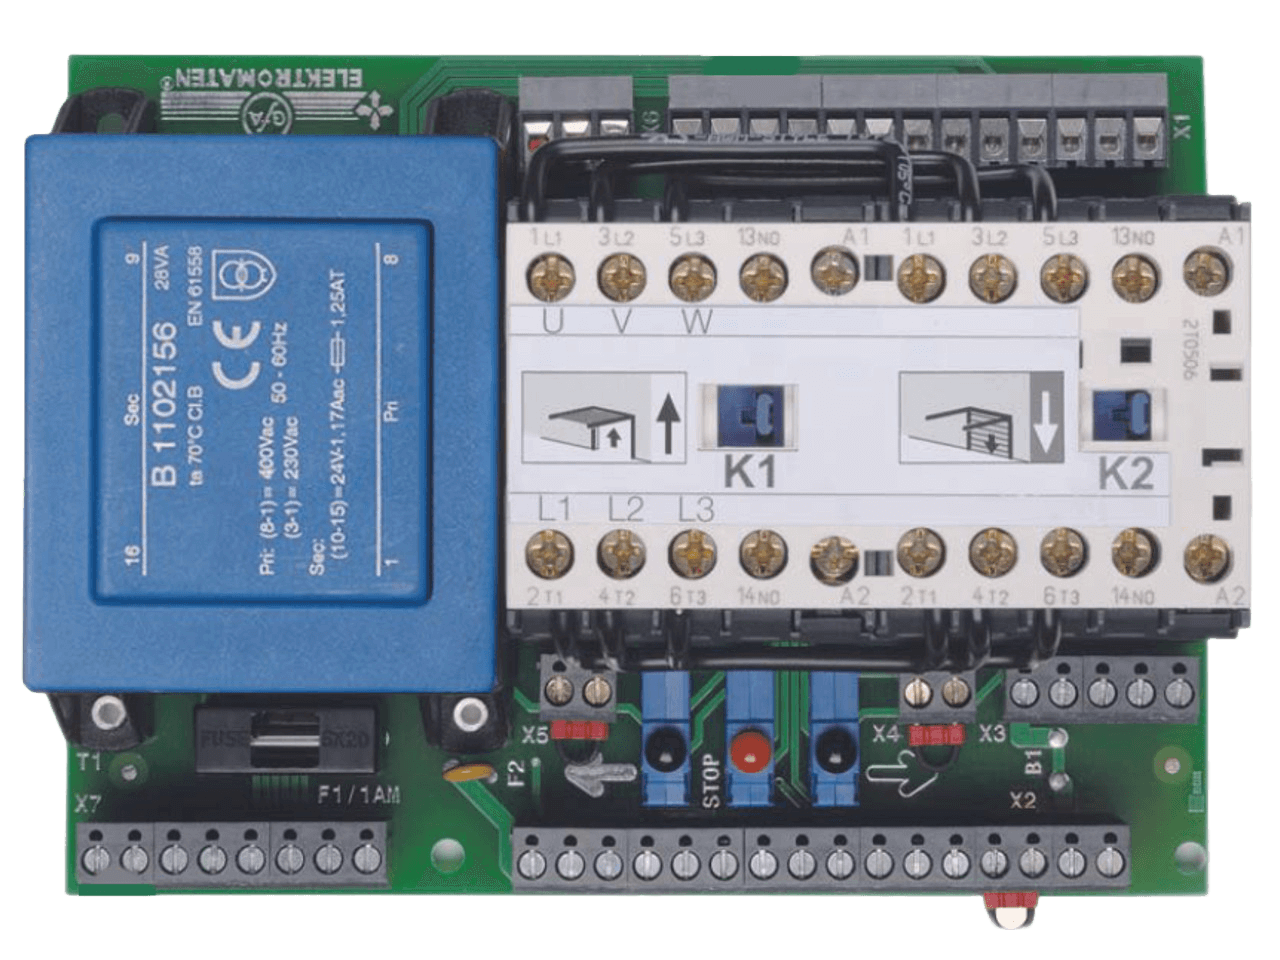 GfA Elektromaten PCB WS900 with 2 Contactors